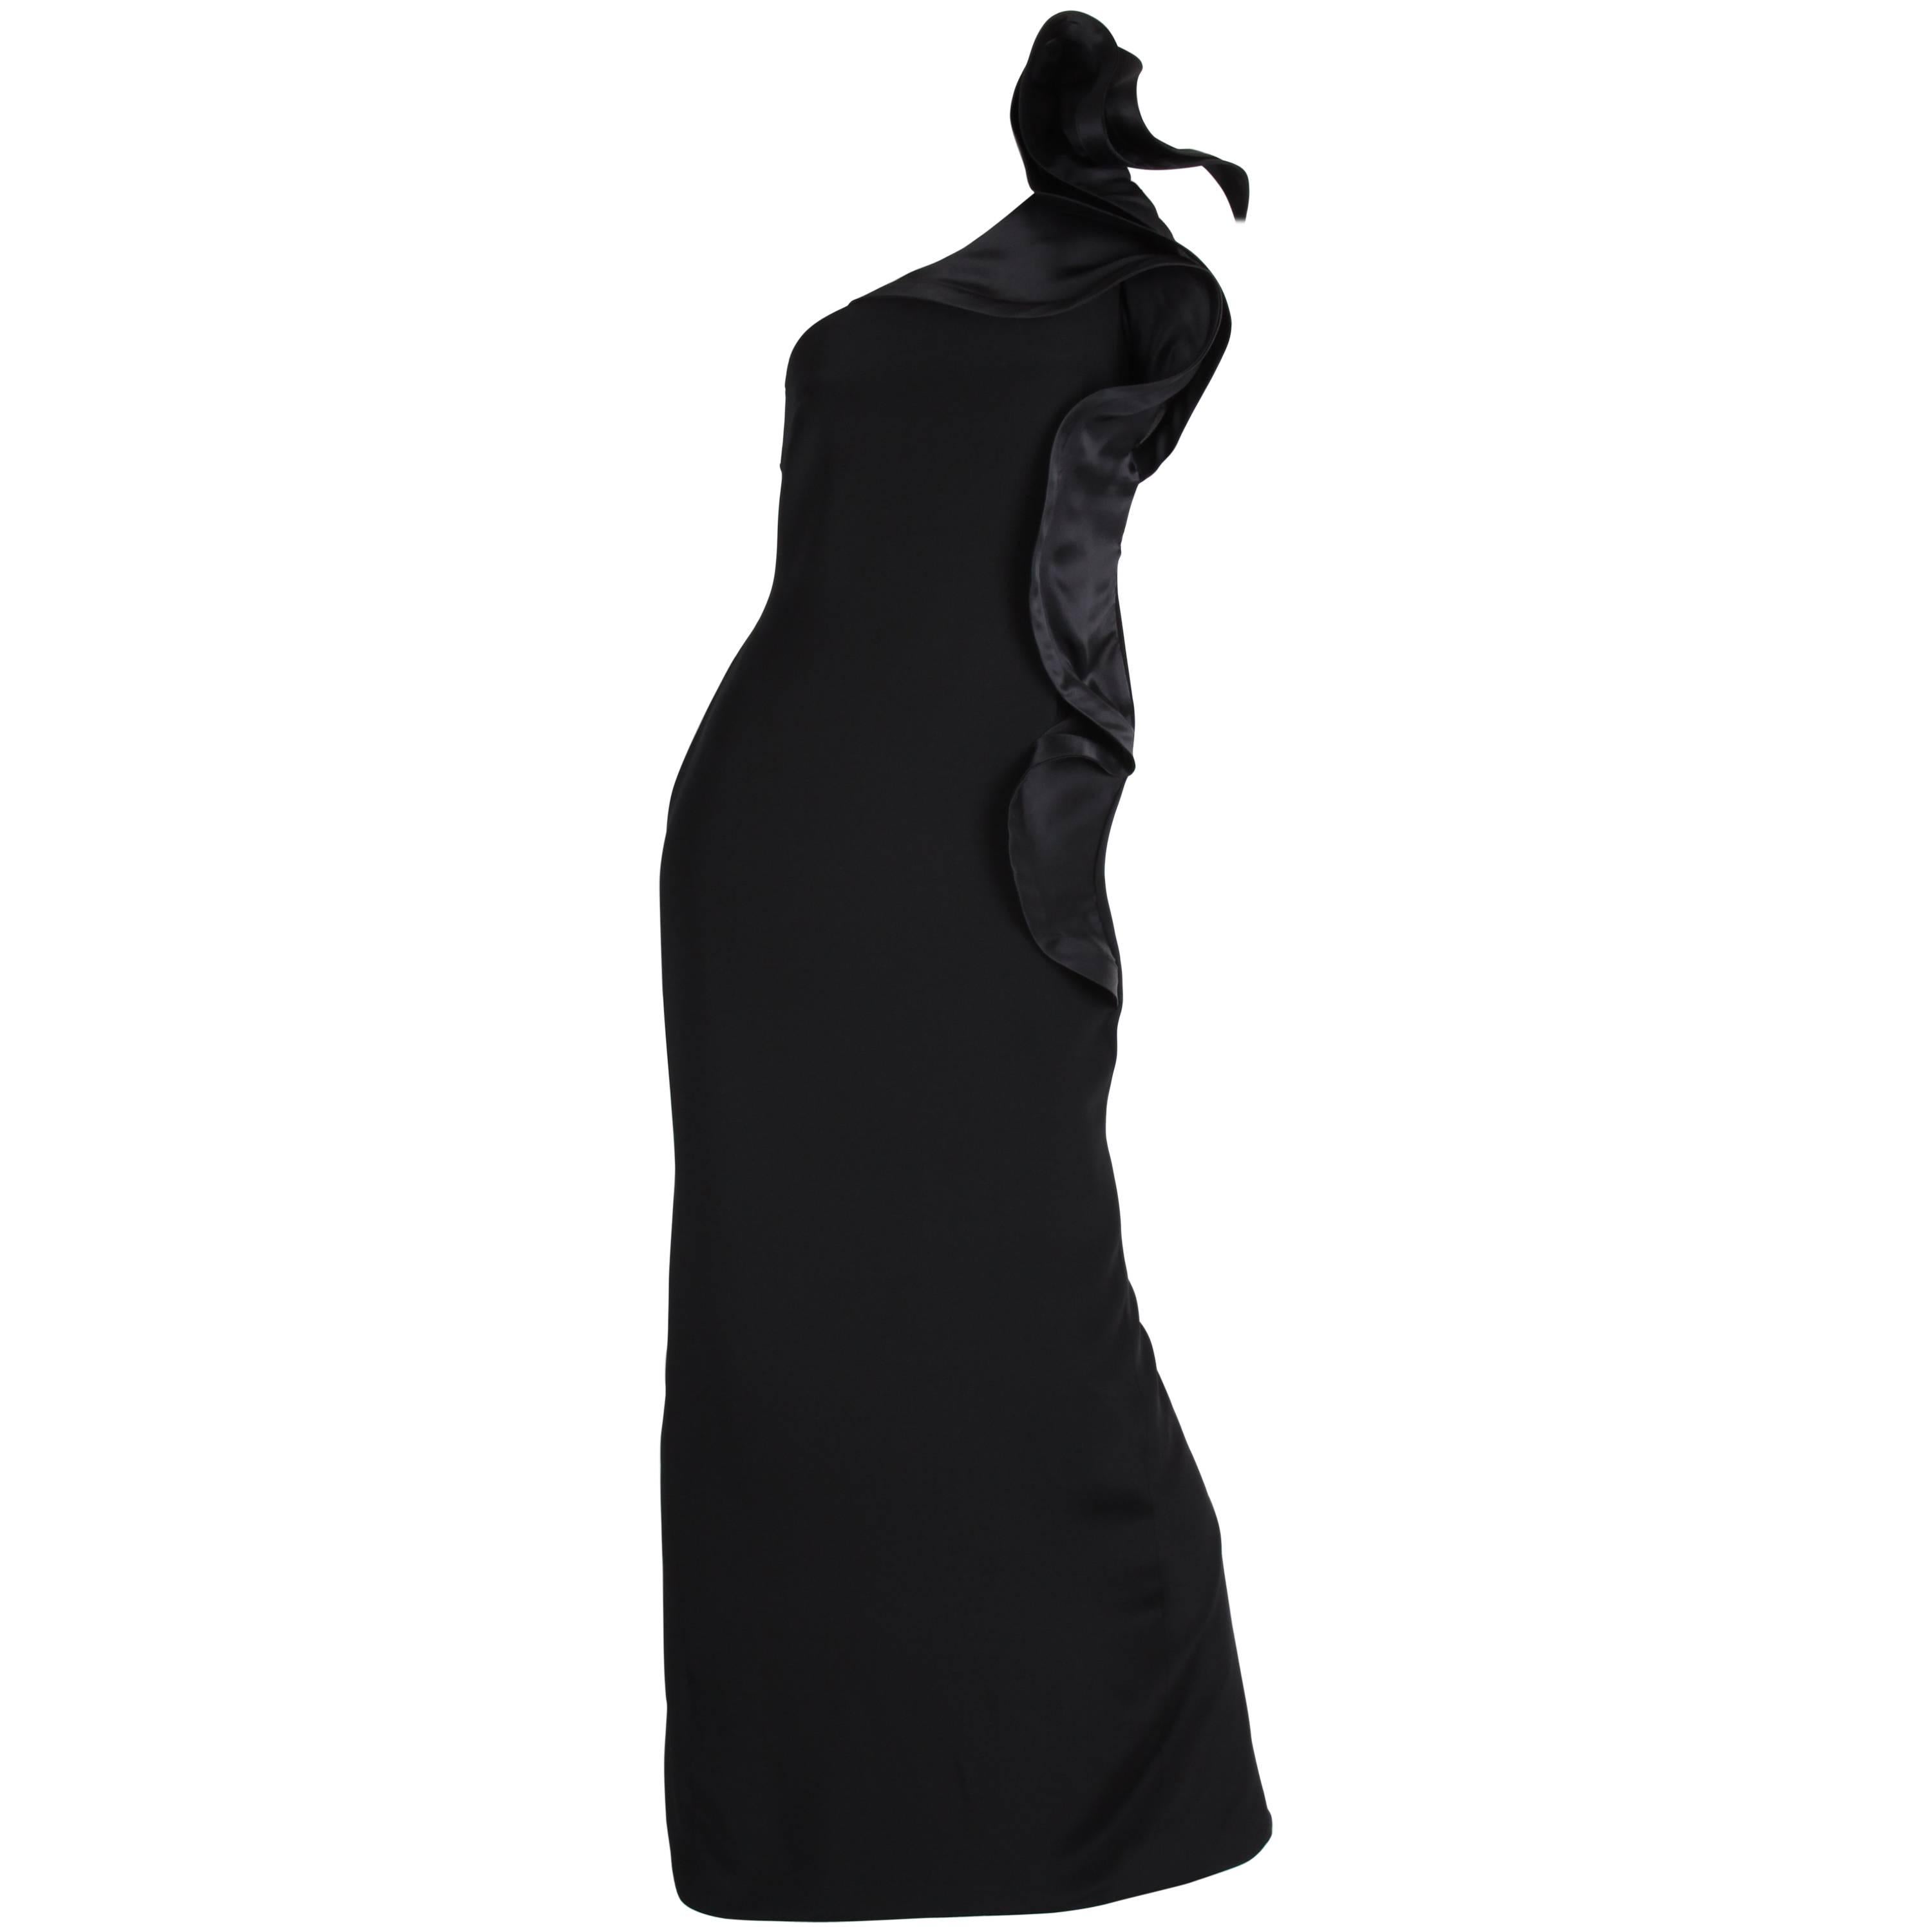   Marchesa Notte One-Shoulder Silk Dress - black   Marchesa Notte One-Shoulder S